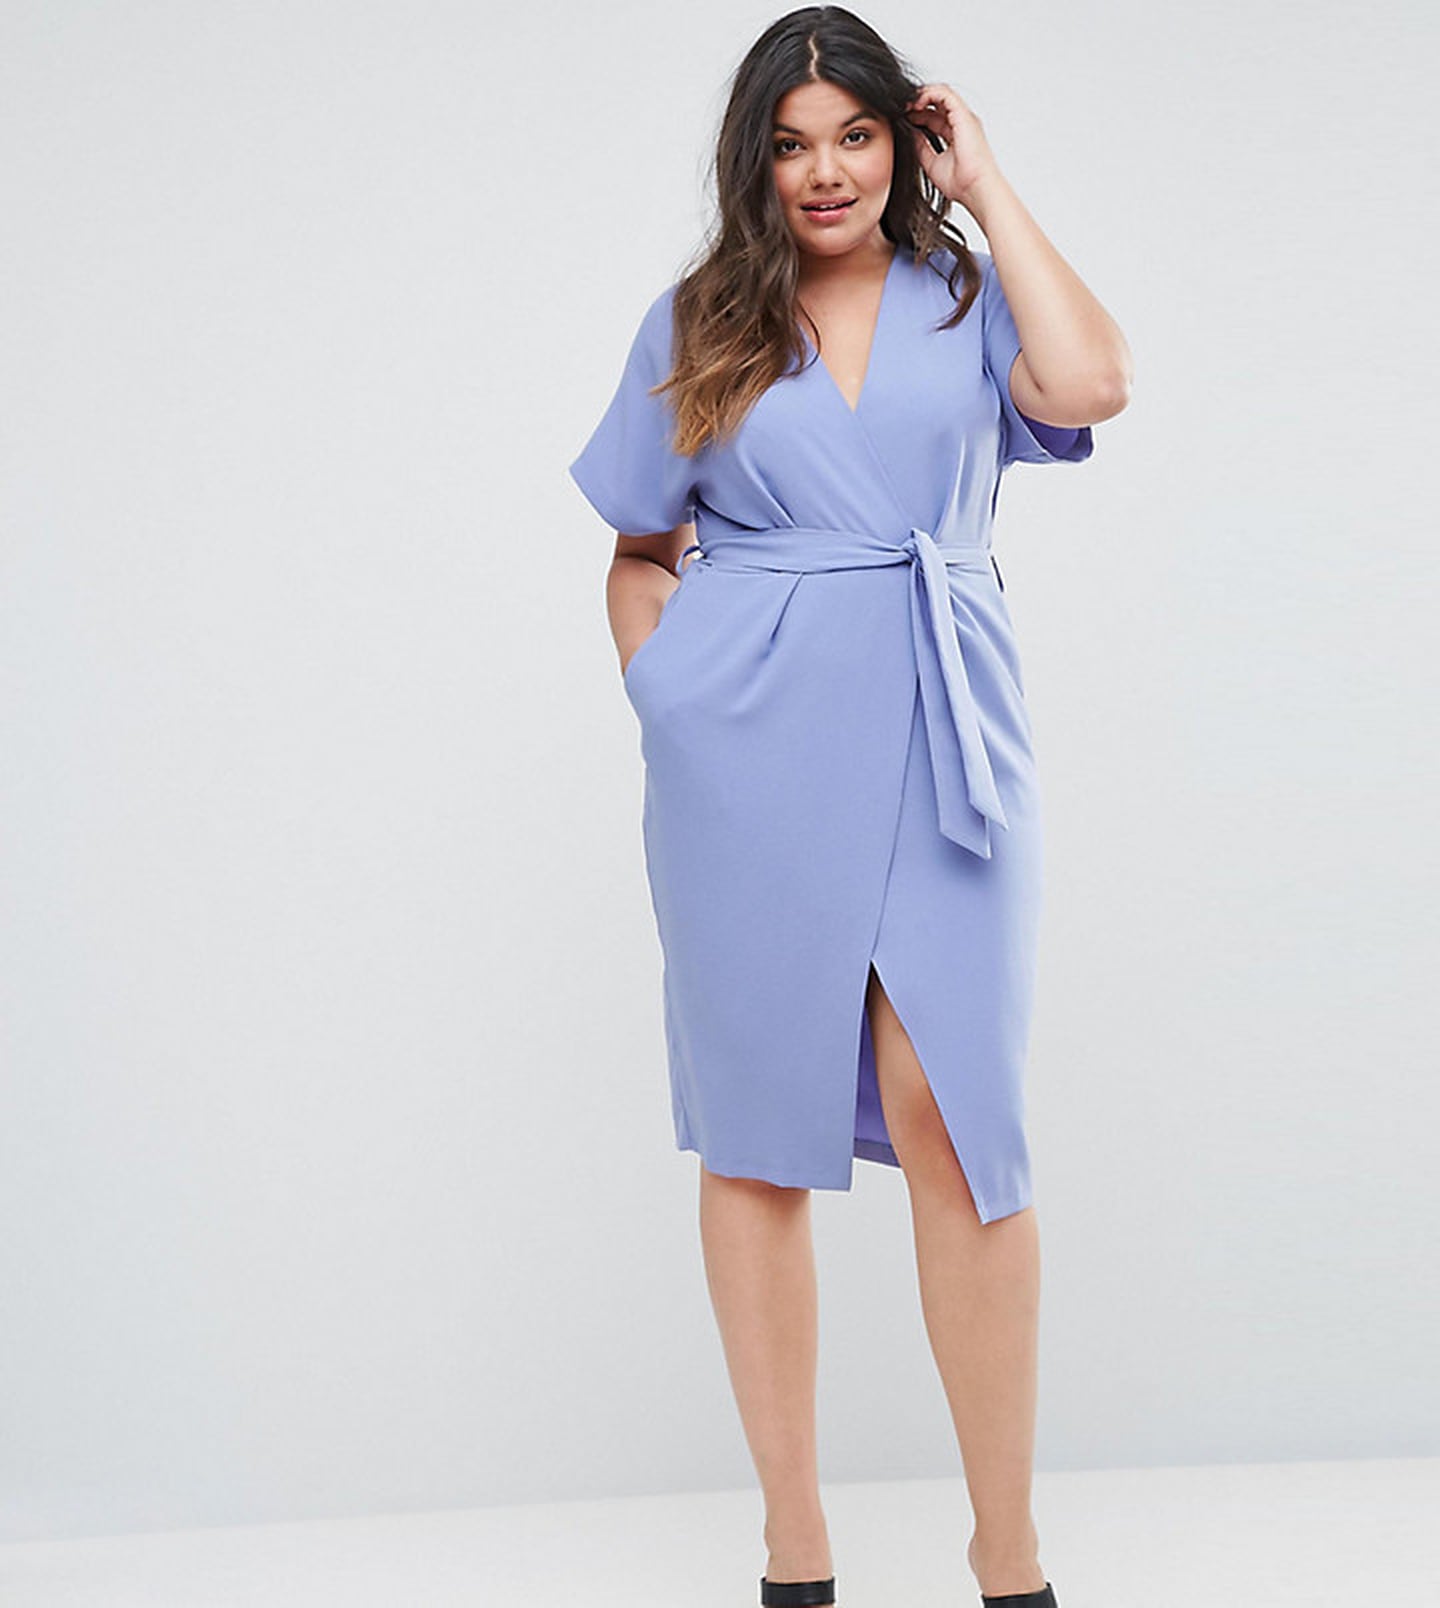 Selena Gomez Blue Realisation Dress | POPSUGAR Fashion